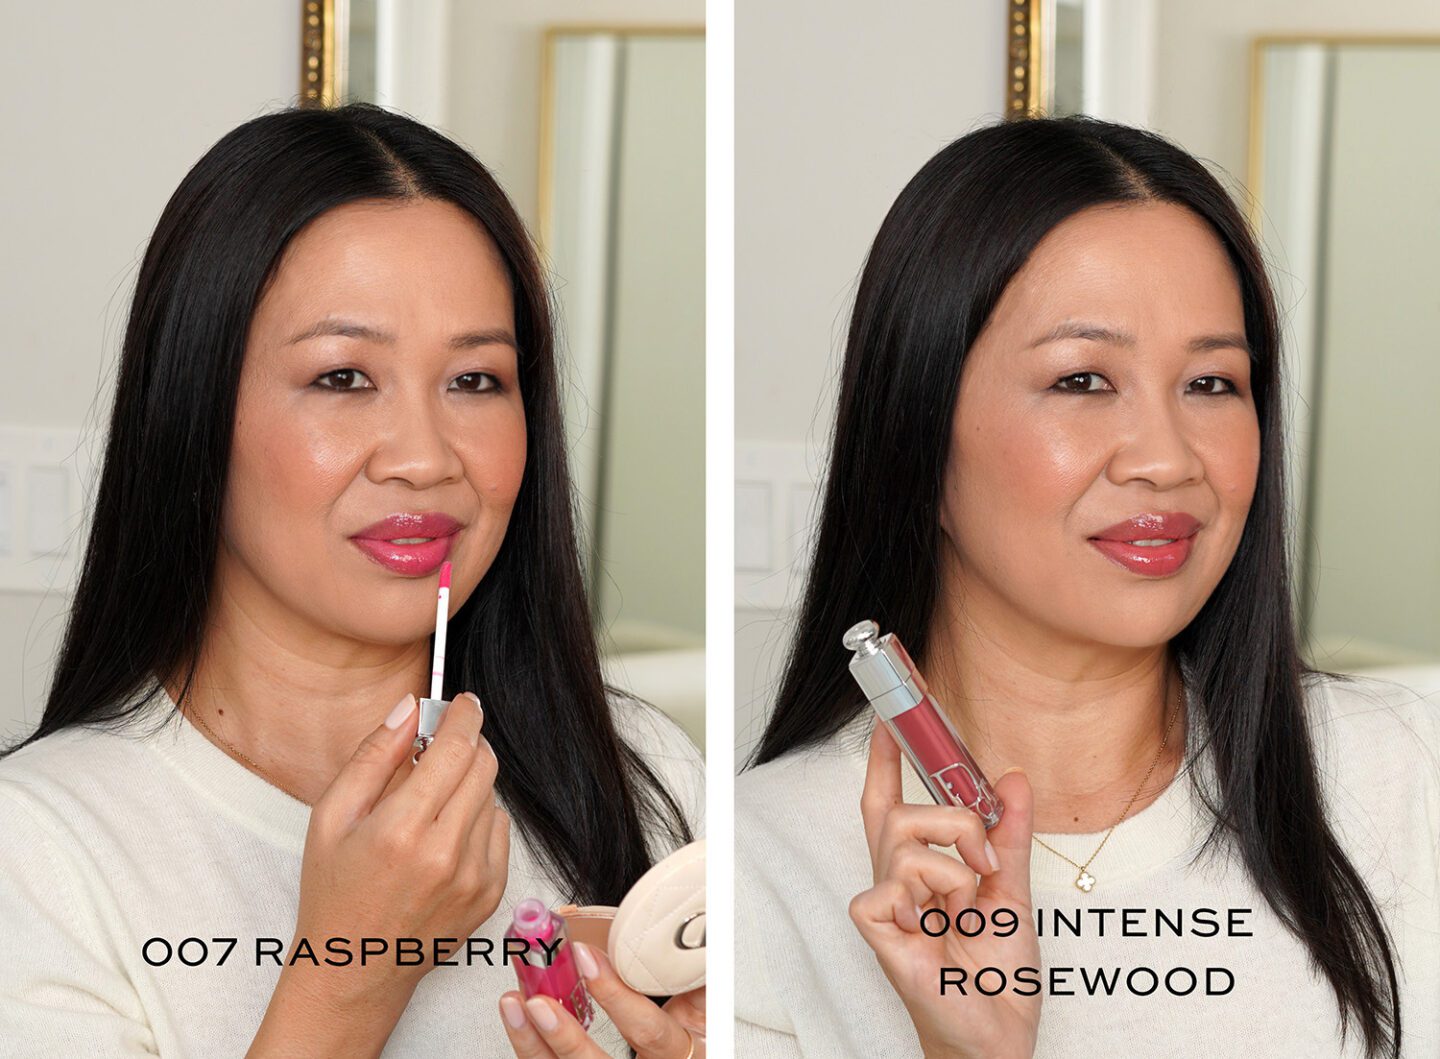 Dior Addict Lip Maximizer 007 Raspberry and 090 Intense Rosewood